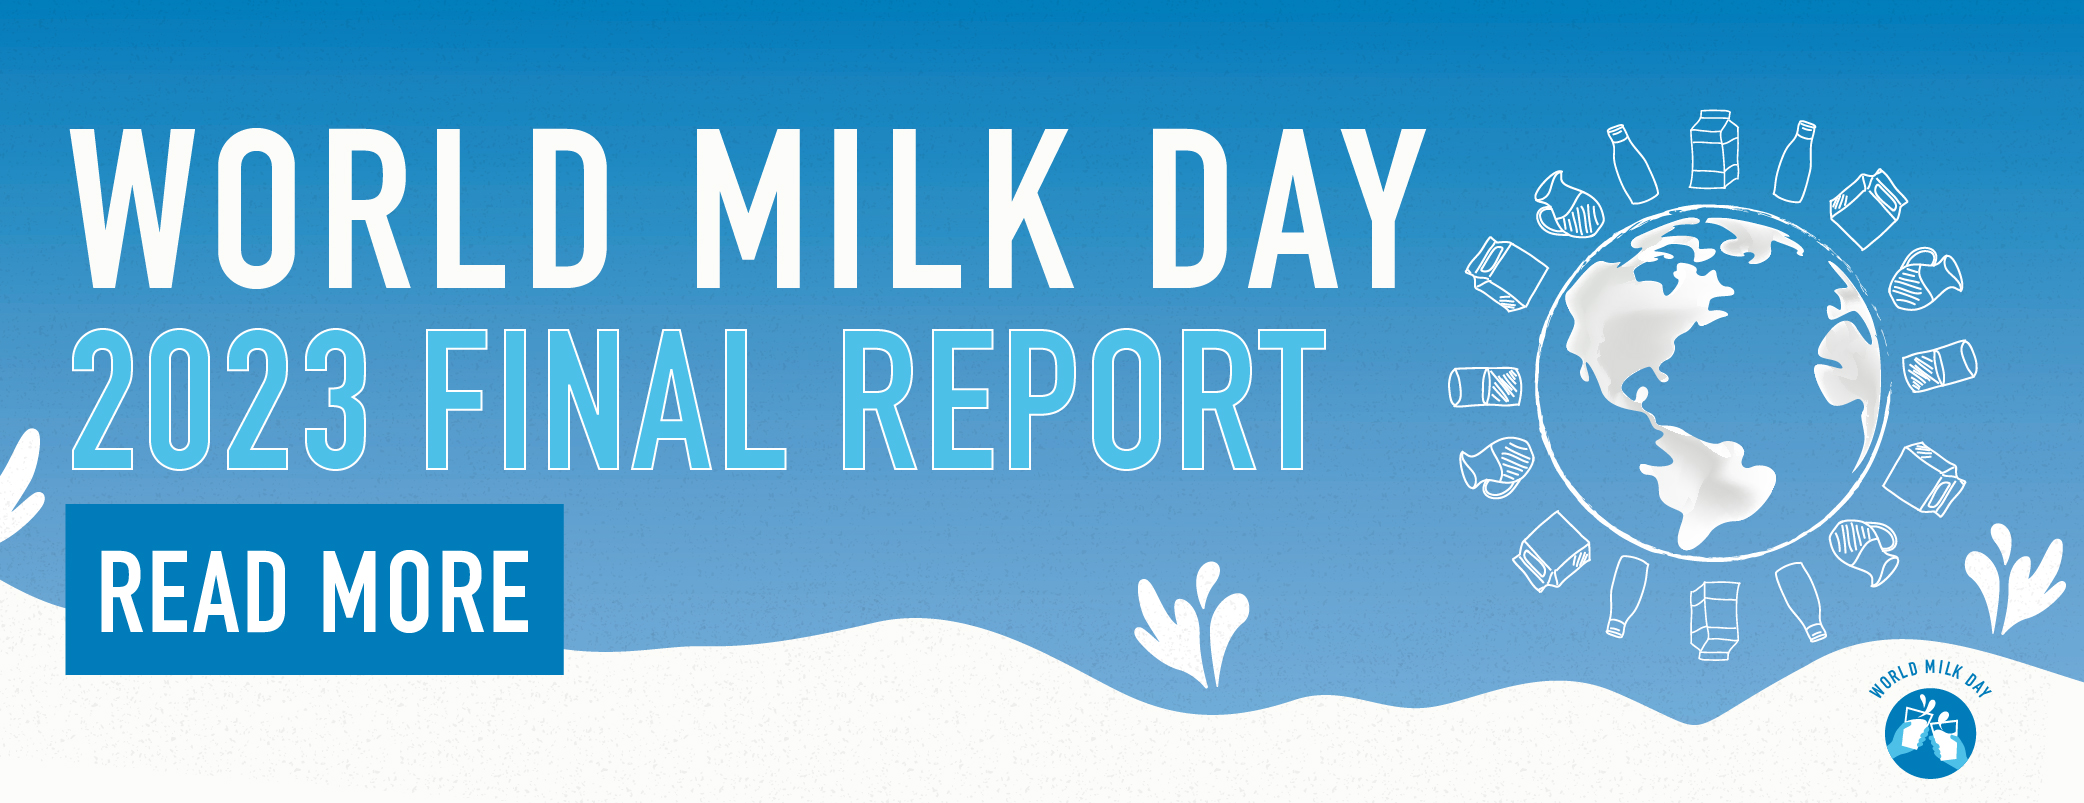 World Milk Day 2023 Report